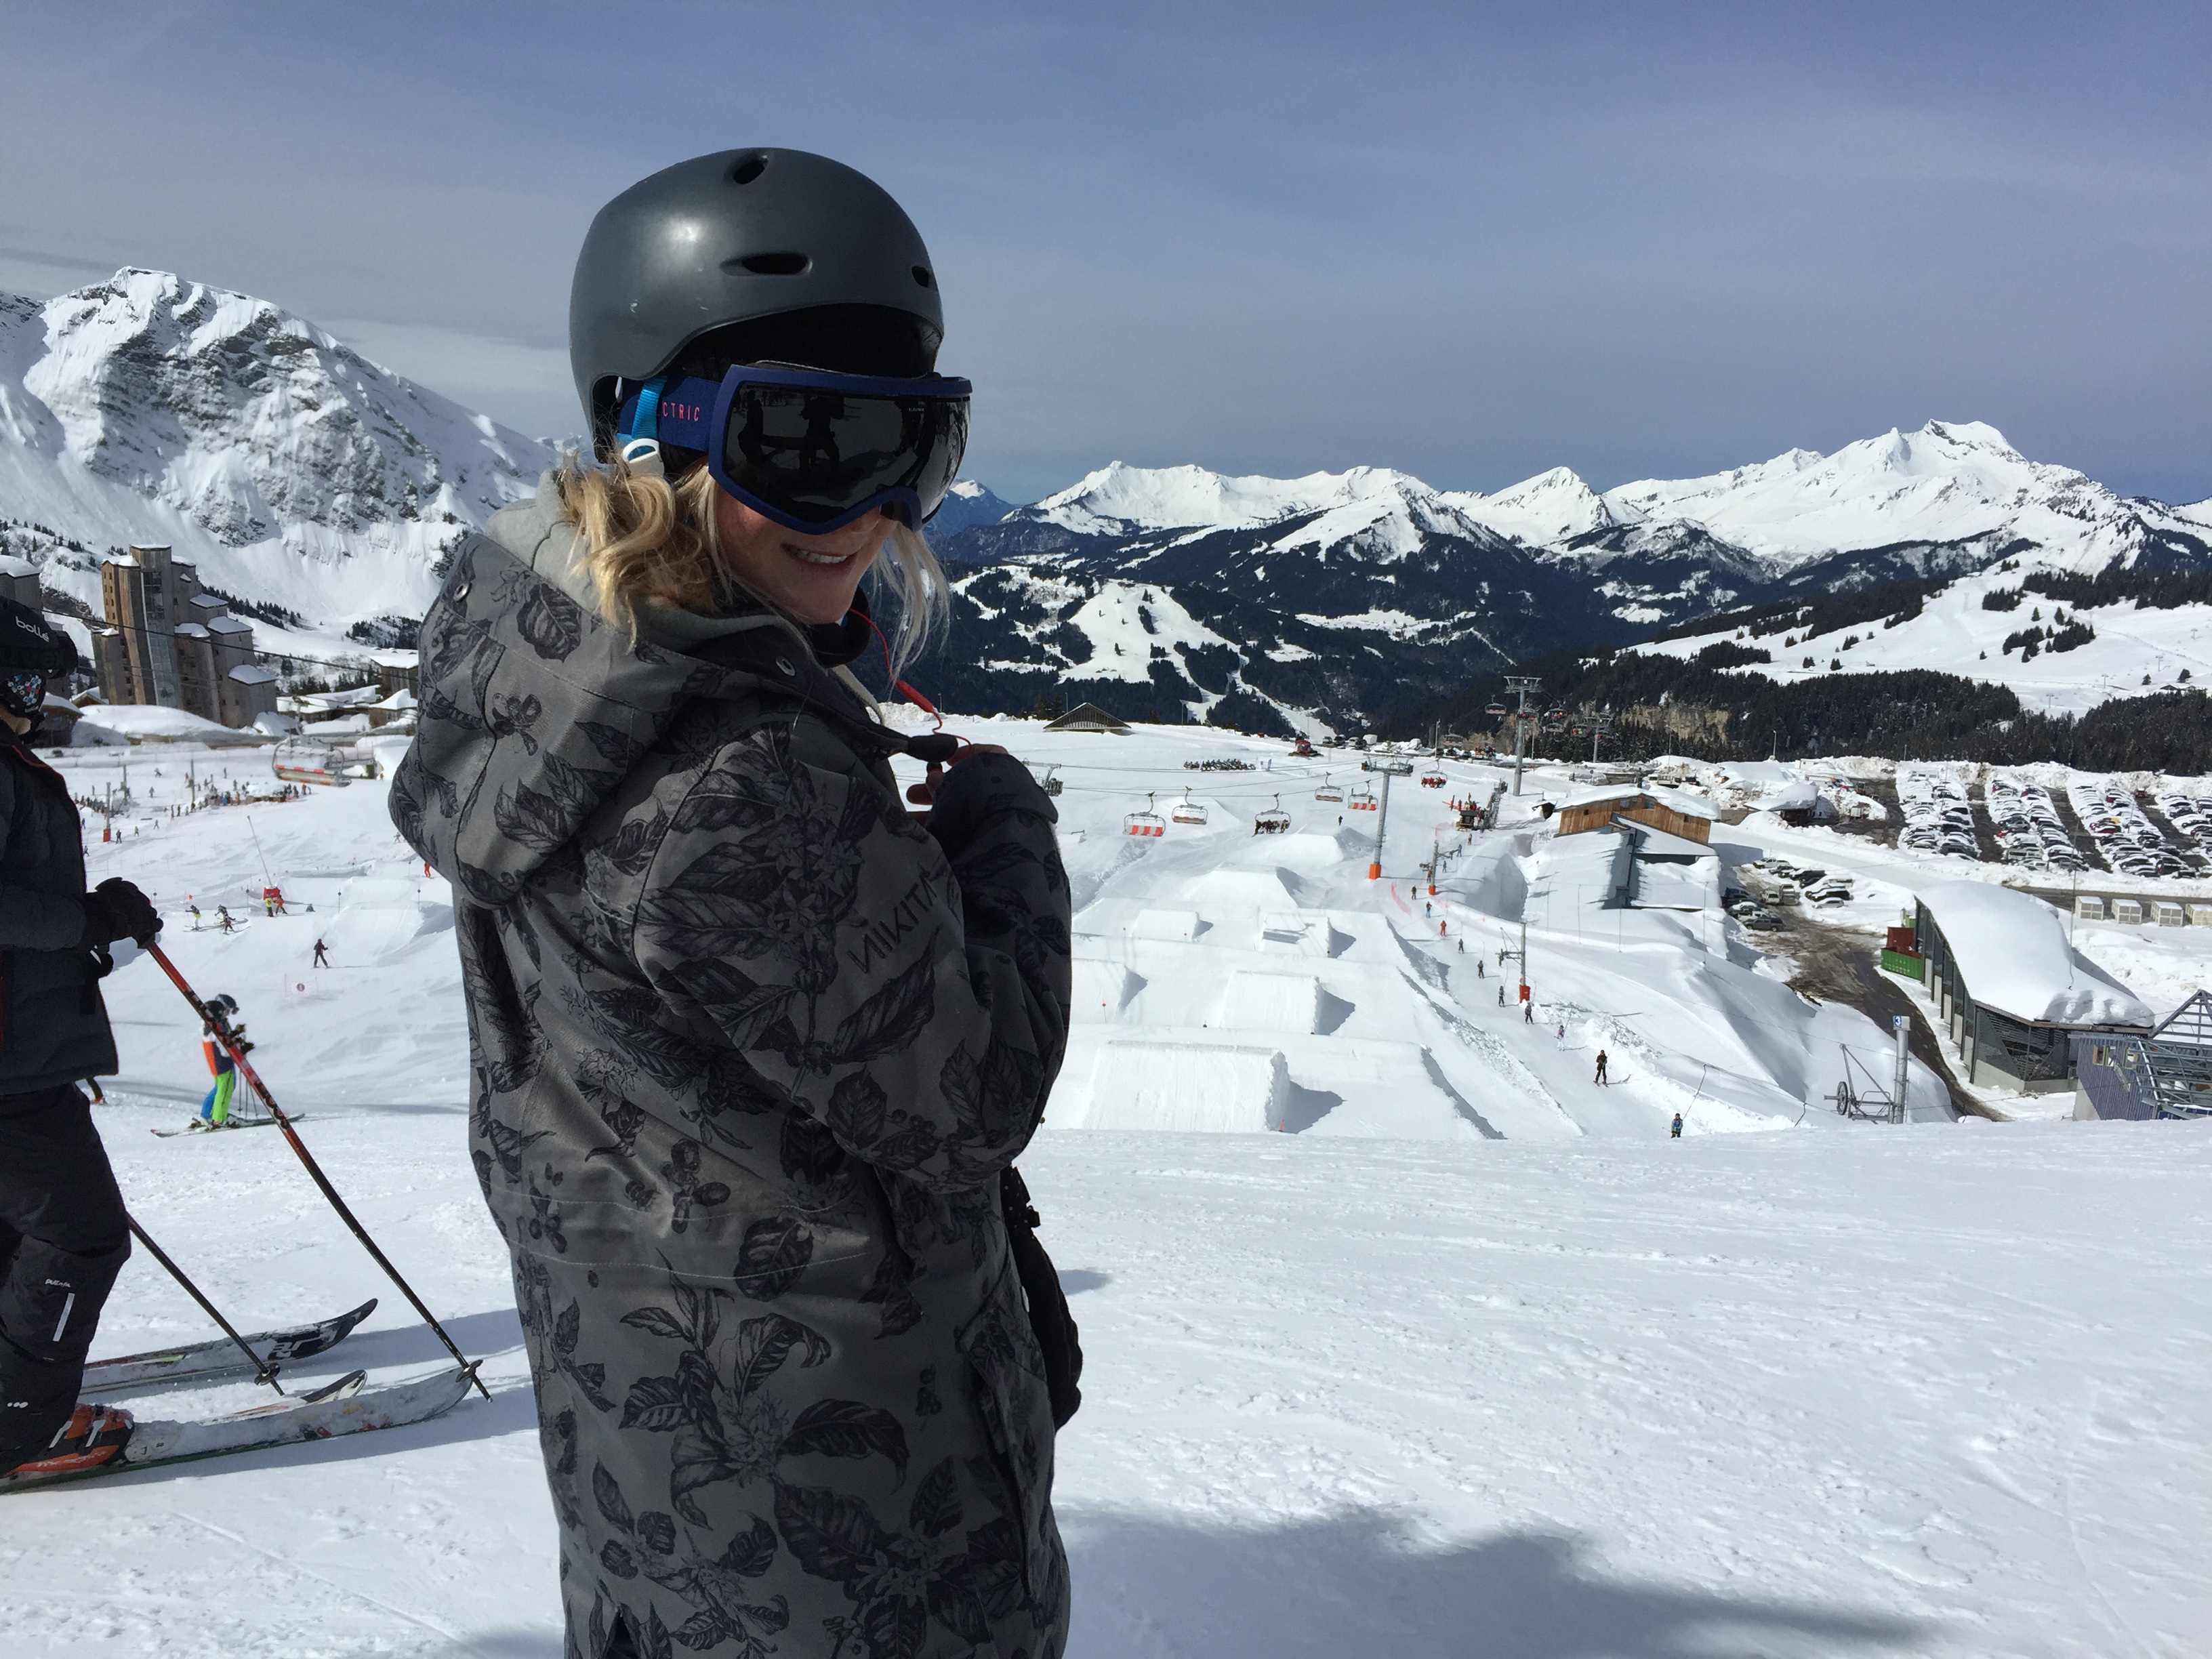 Electric Snowboard Ski Goggles EG2.5 2015 Including Low Light Lens 